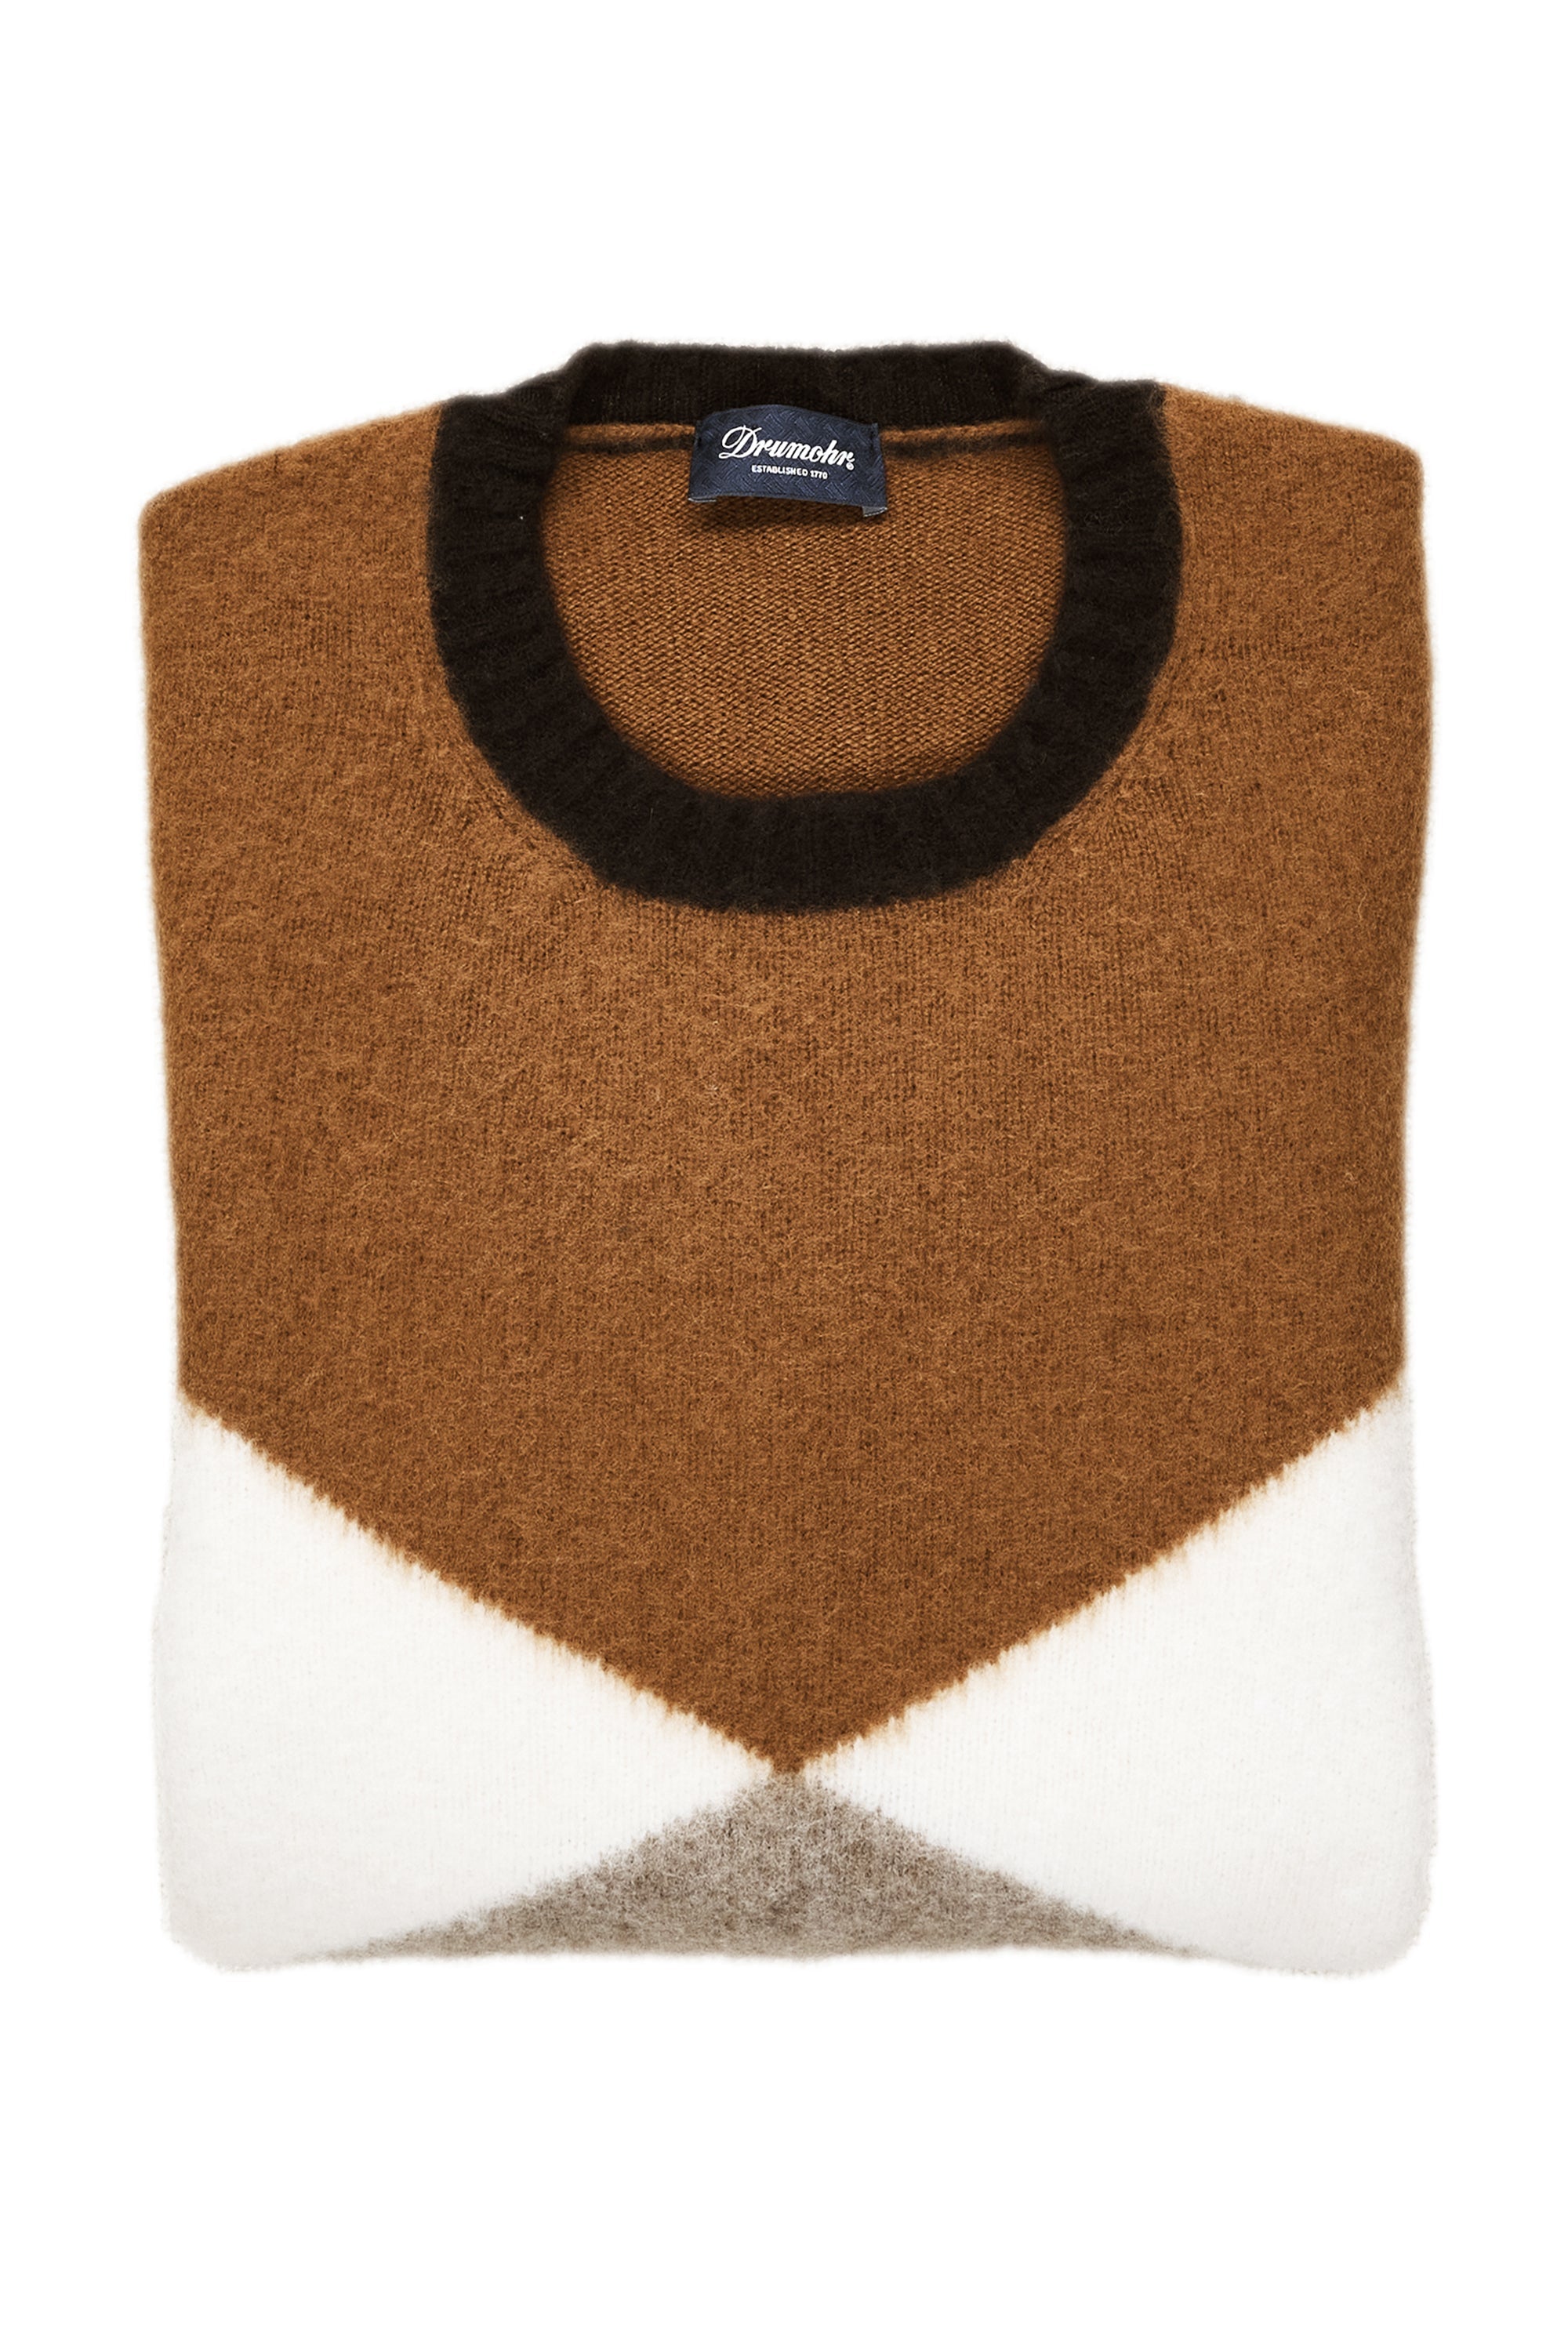 Drumohr Latte/Grigio/Chiaro/Antracite Geometric Lambswool Crewneck Sweater